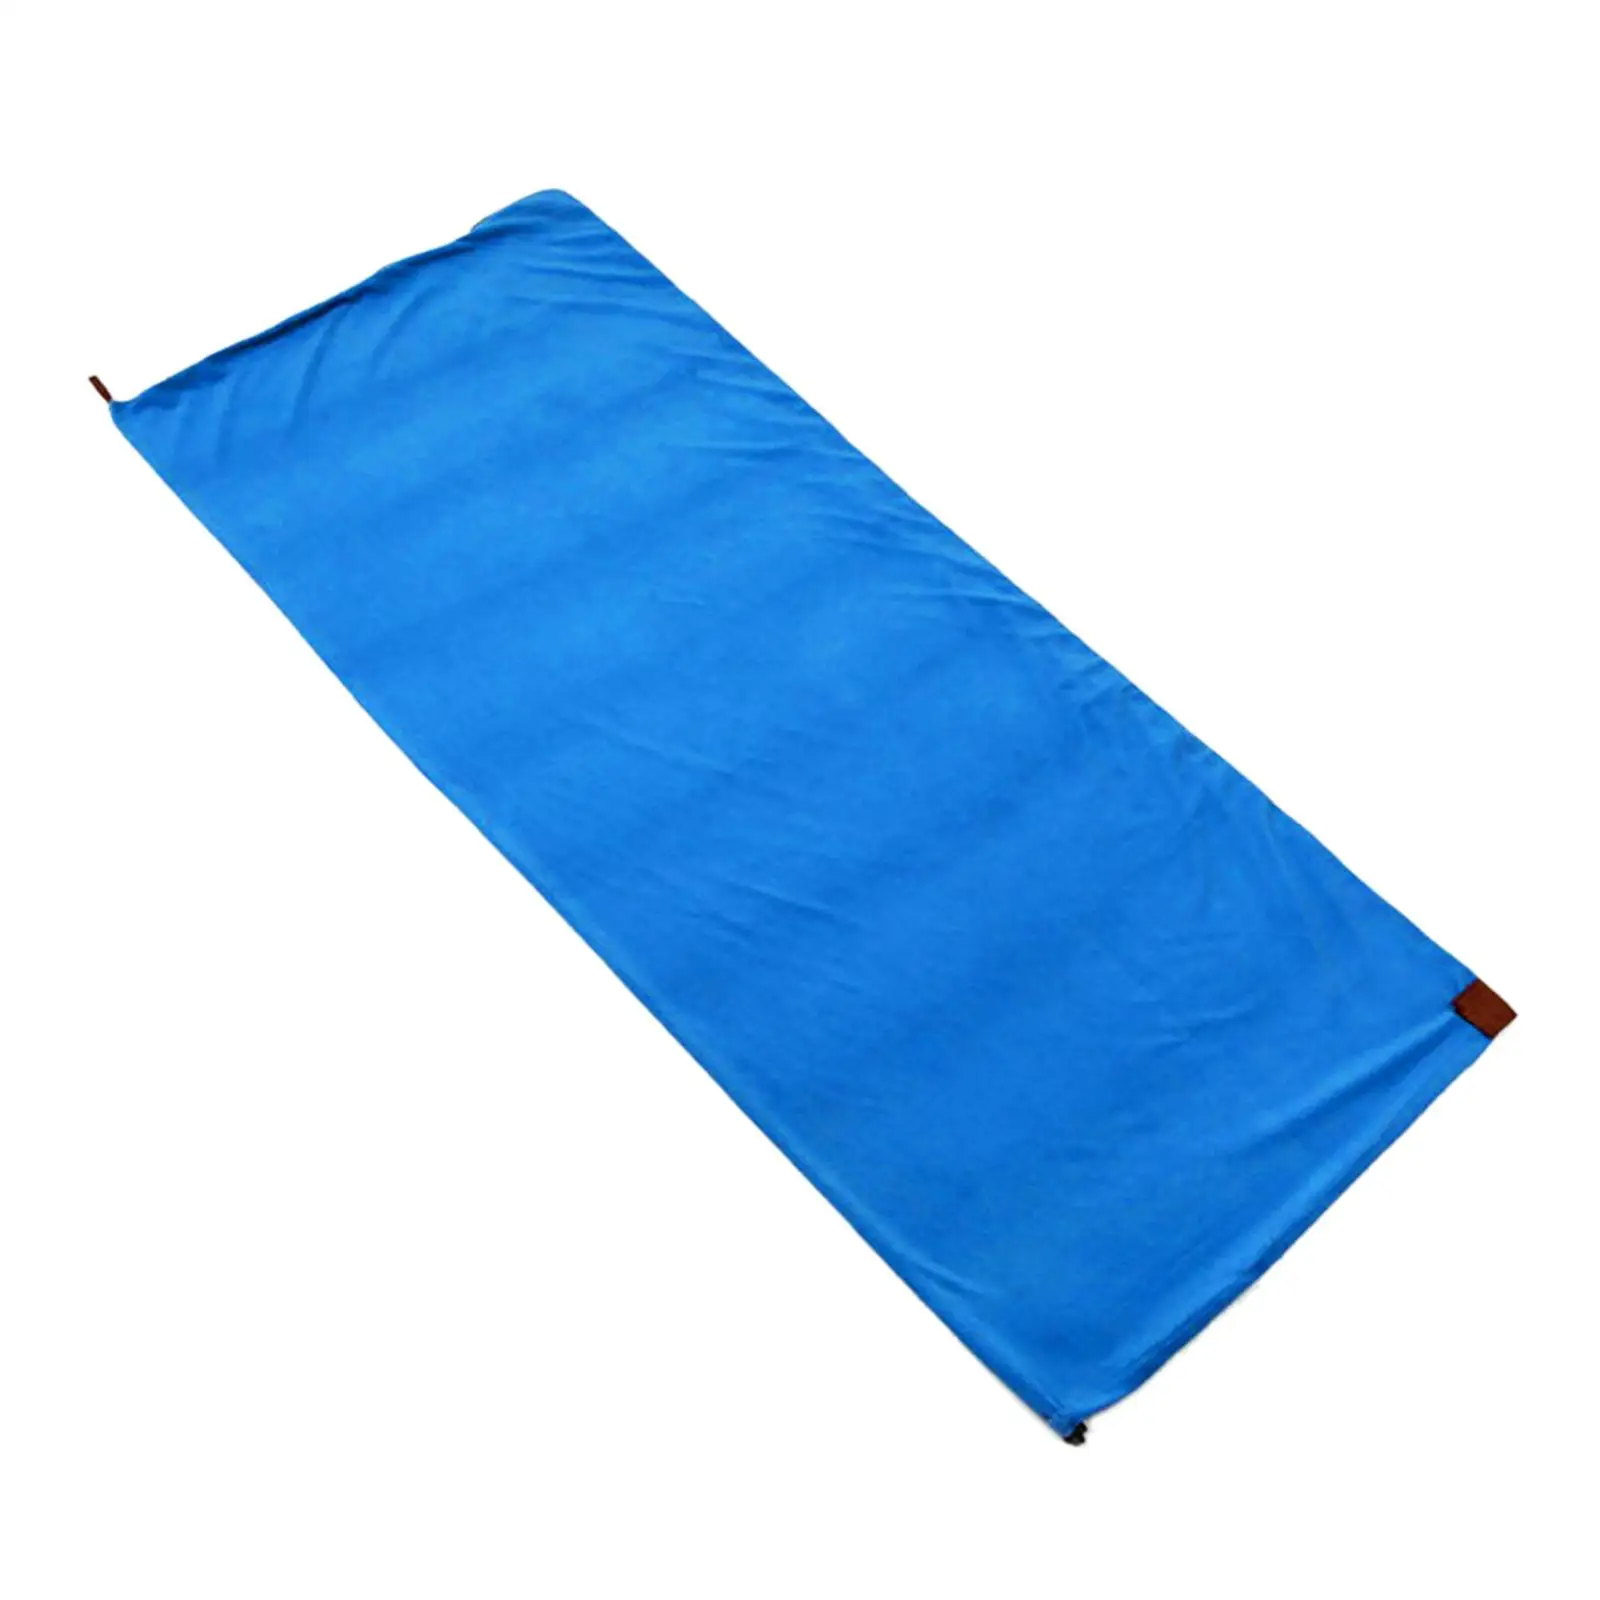 Portable Camping Blanket Outdoor Emergency Soft Fleece Sleeping Bag Liner for